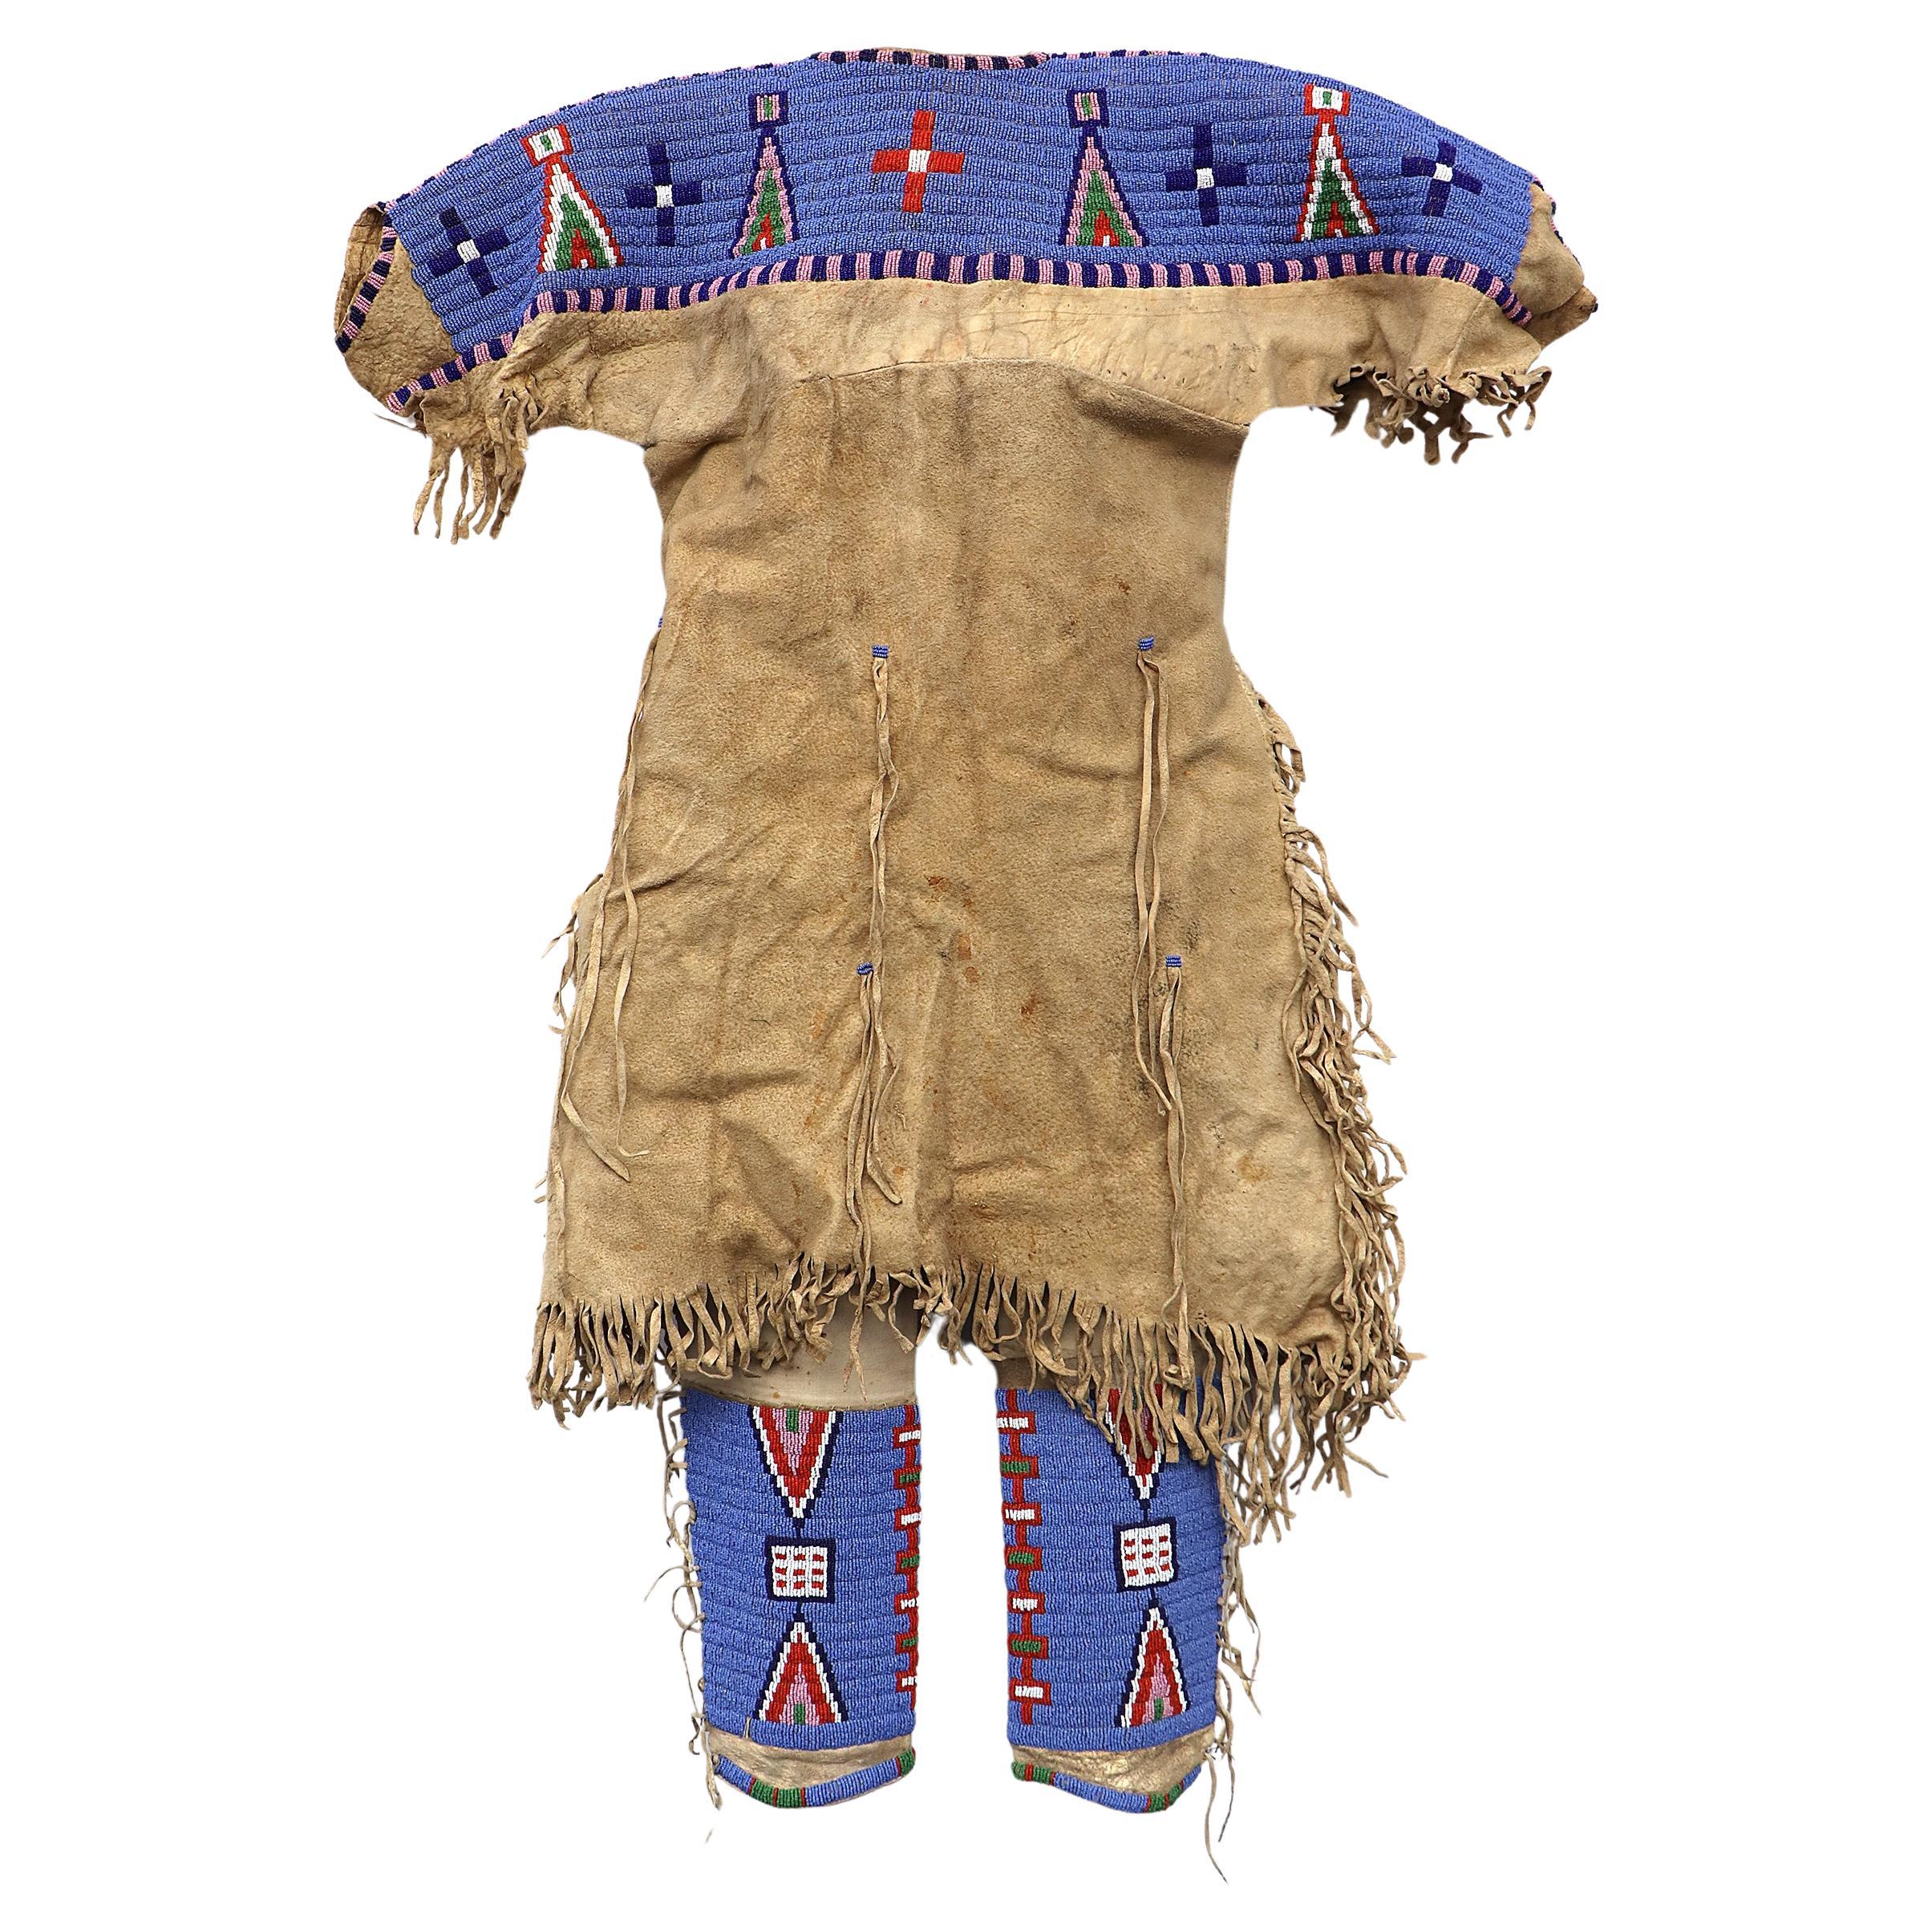 Antique Beaded Child's Dress & Leggings, Sioux (Plains Indian) circa 1900, blue